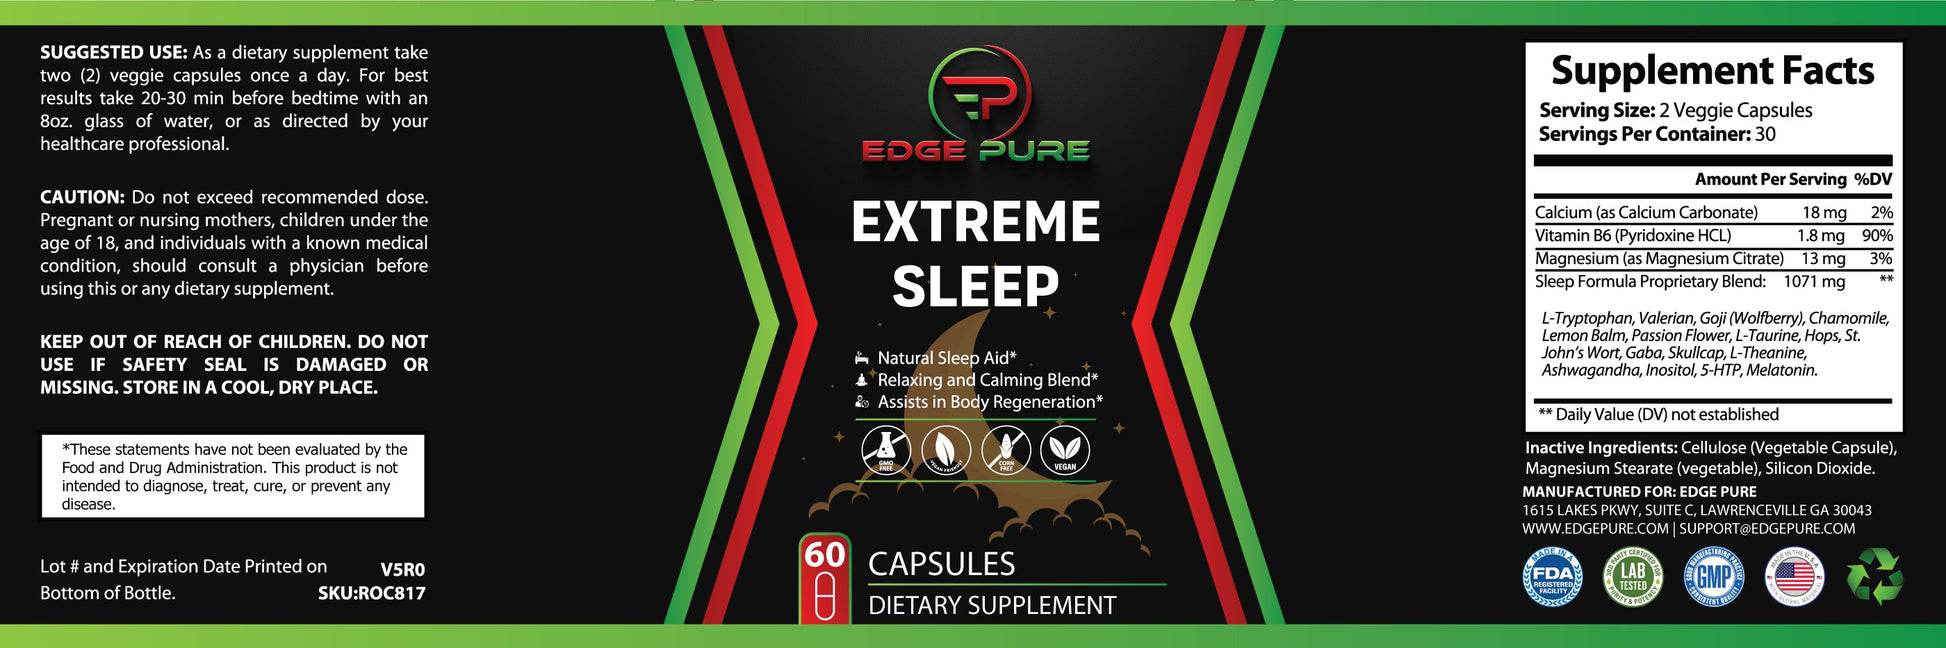 Extreme Sleep Edge Pure